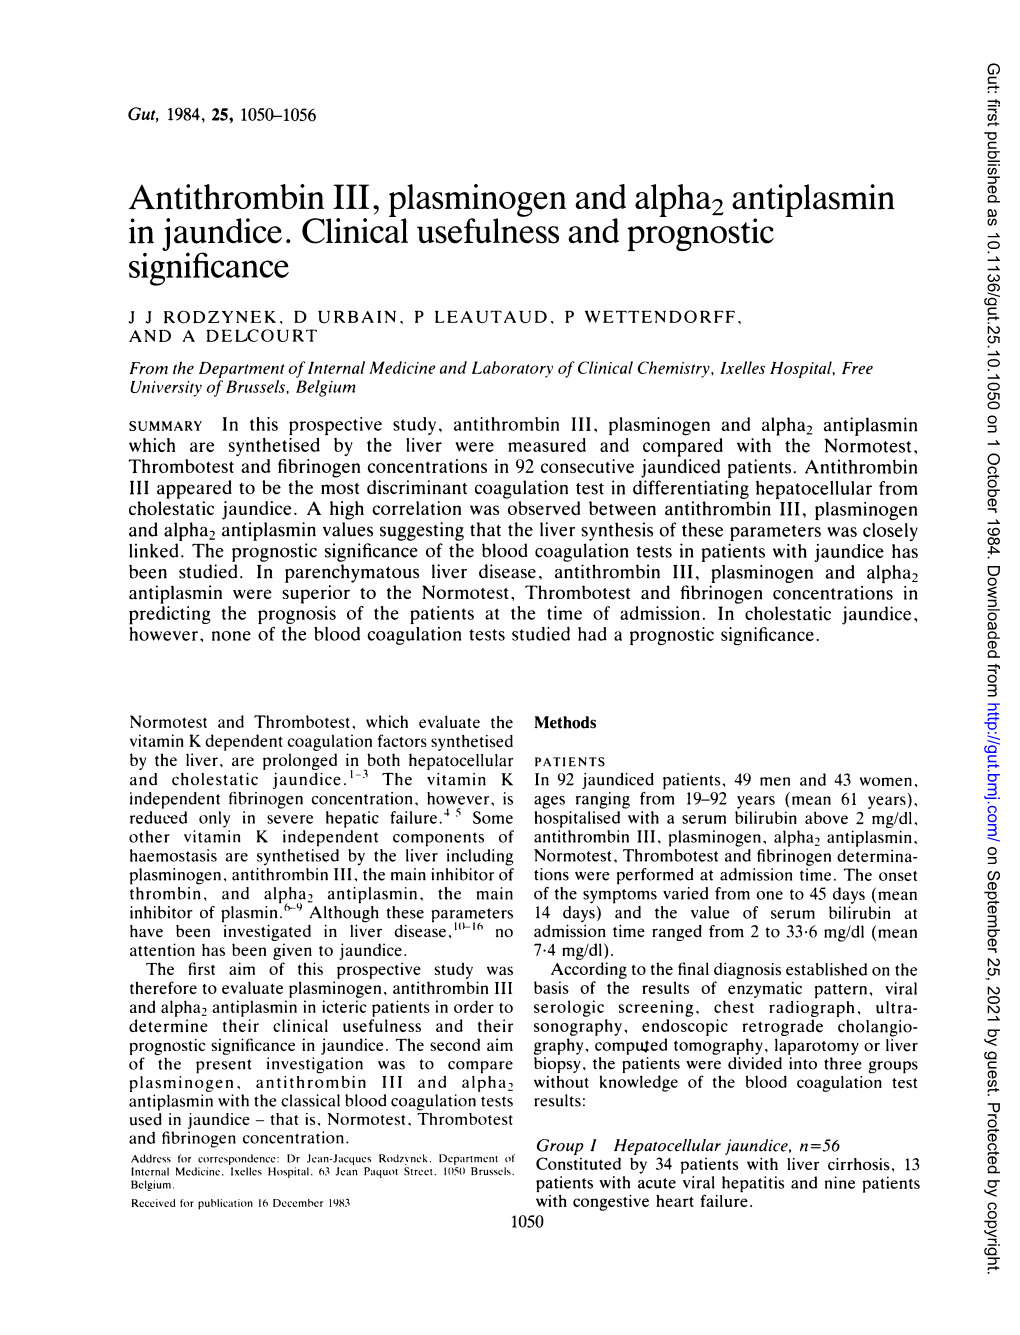 Antithrombin III, Plasminogen and Alpha2 Antiplasmin in Jaundice